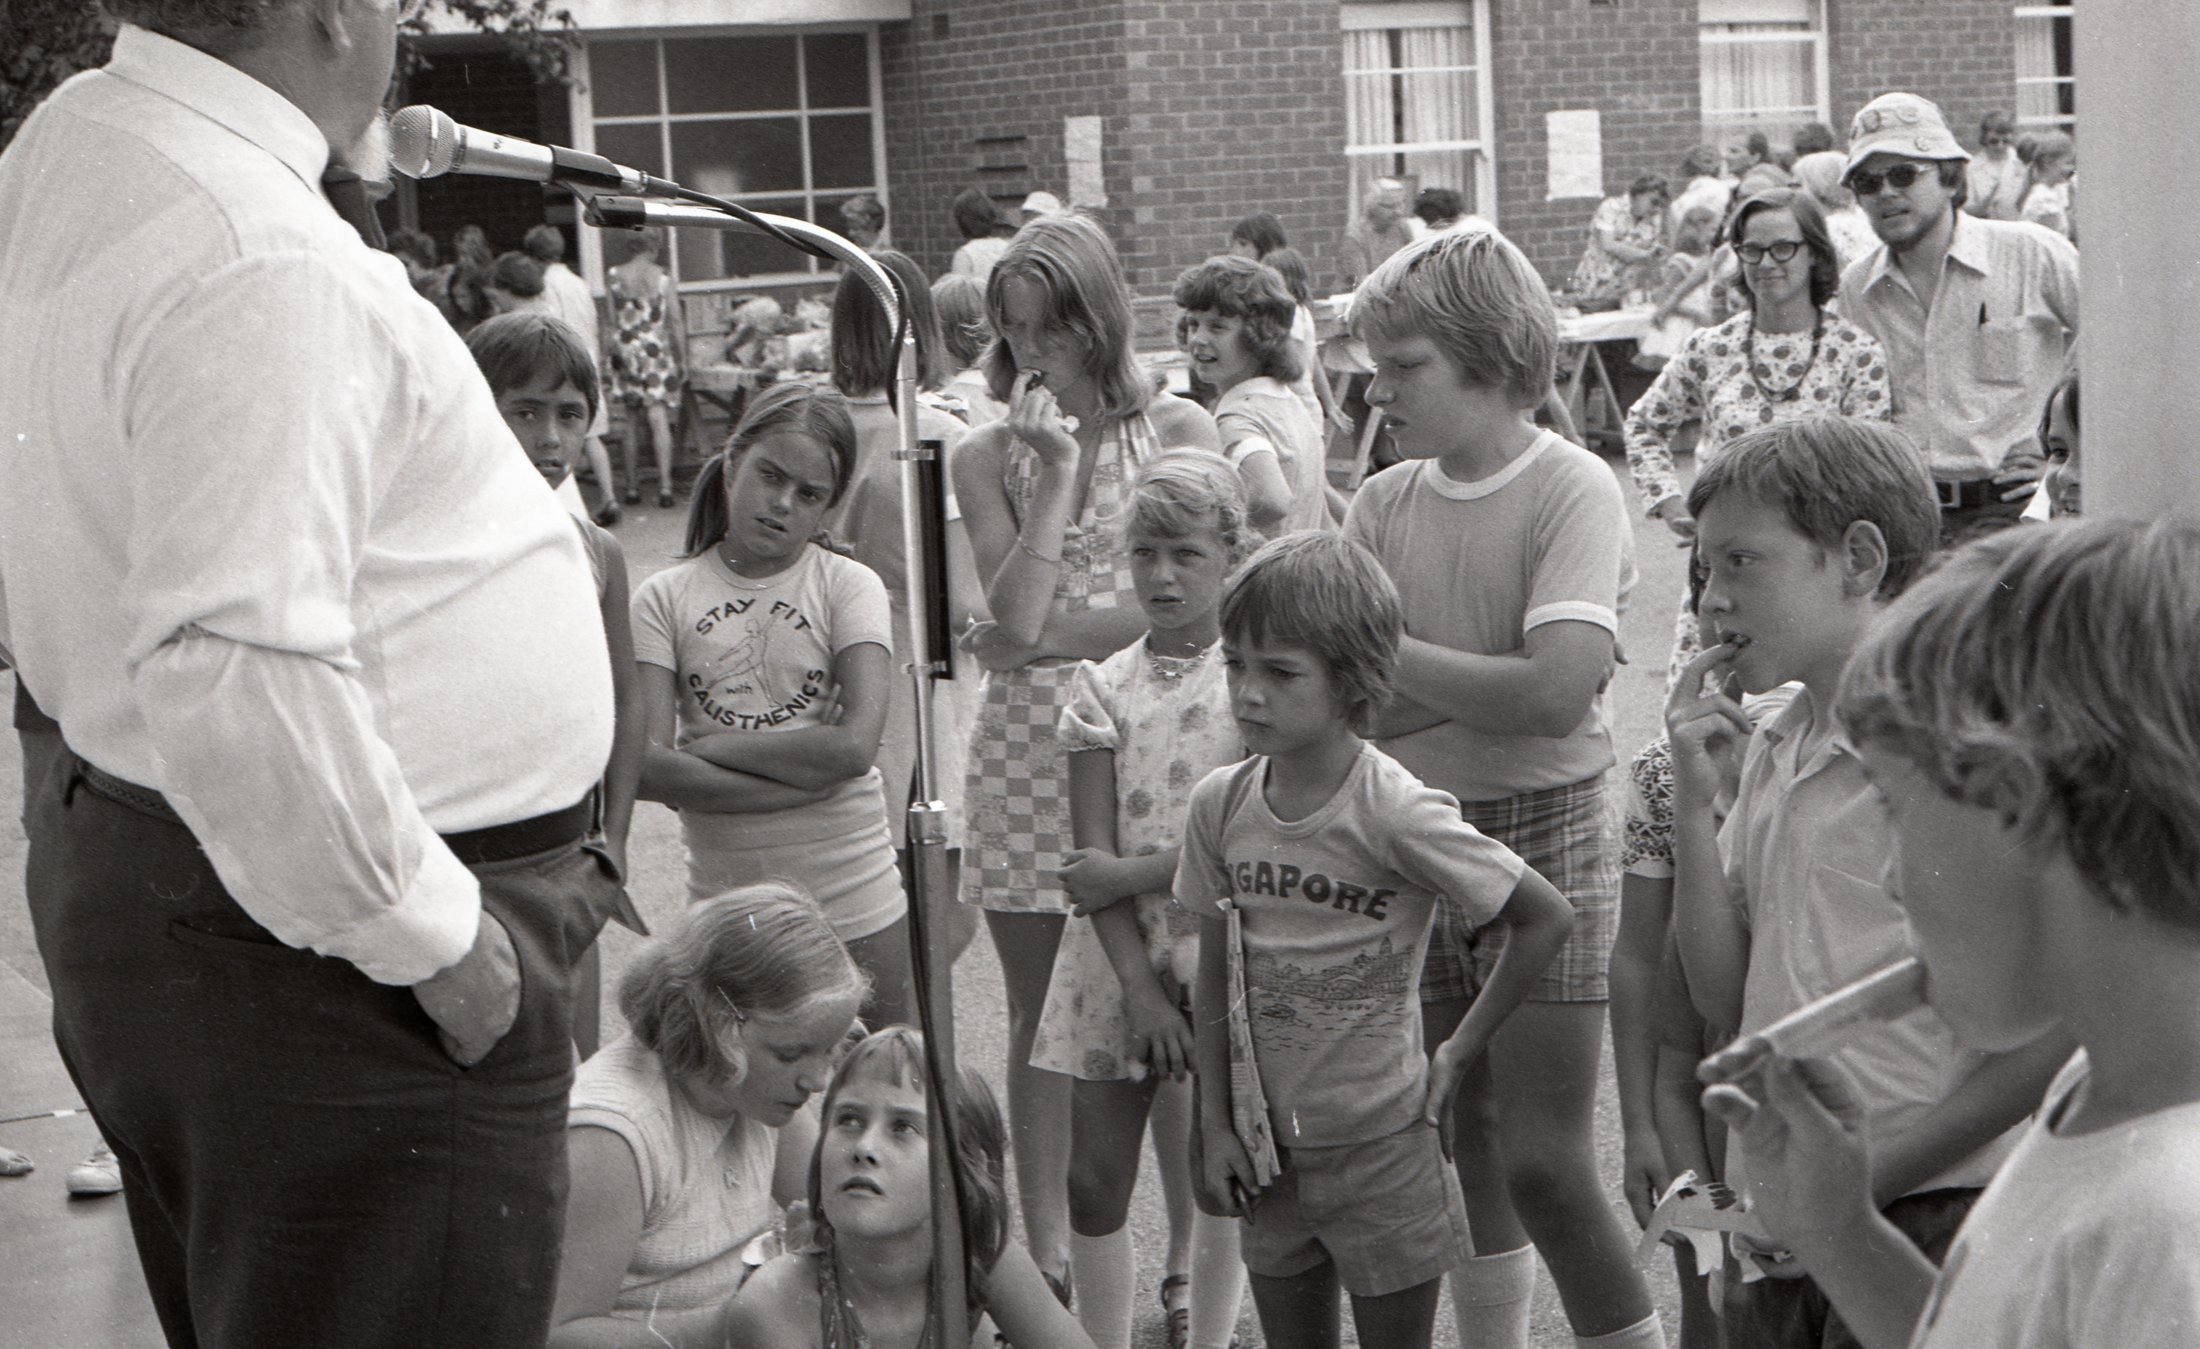 1975 - KC Fair - Crowd Of Children (2)